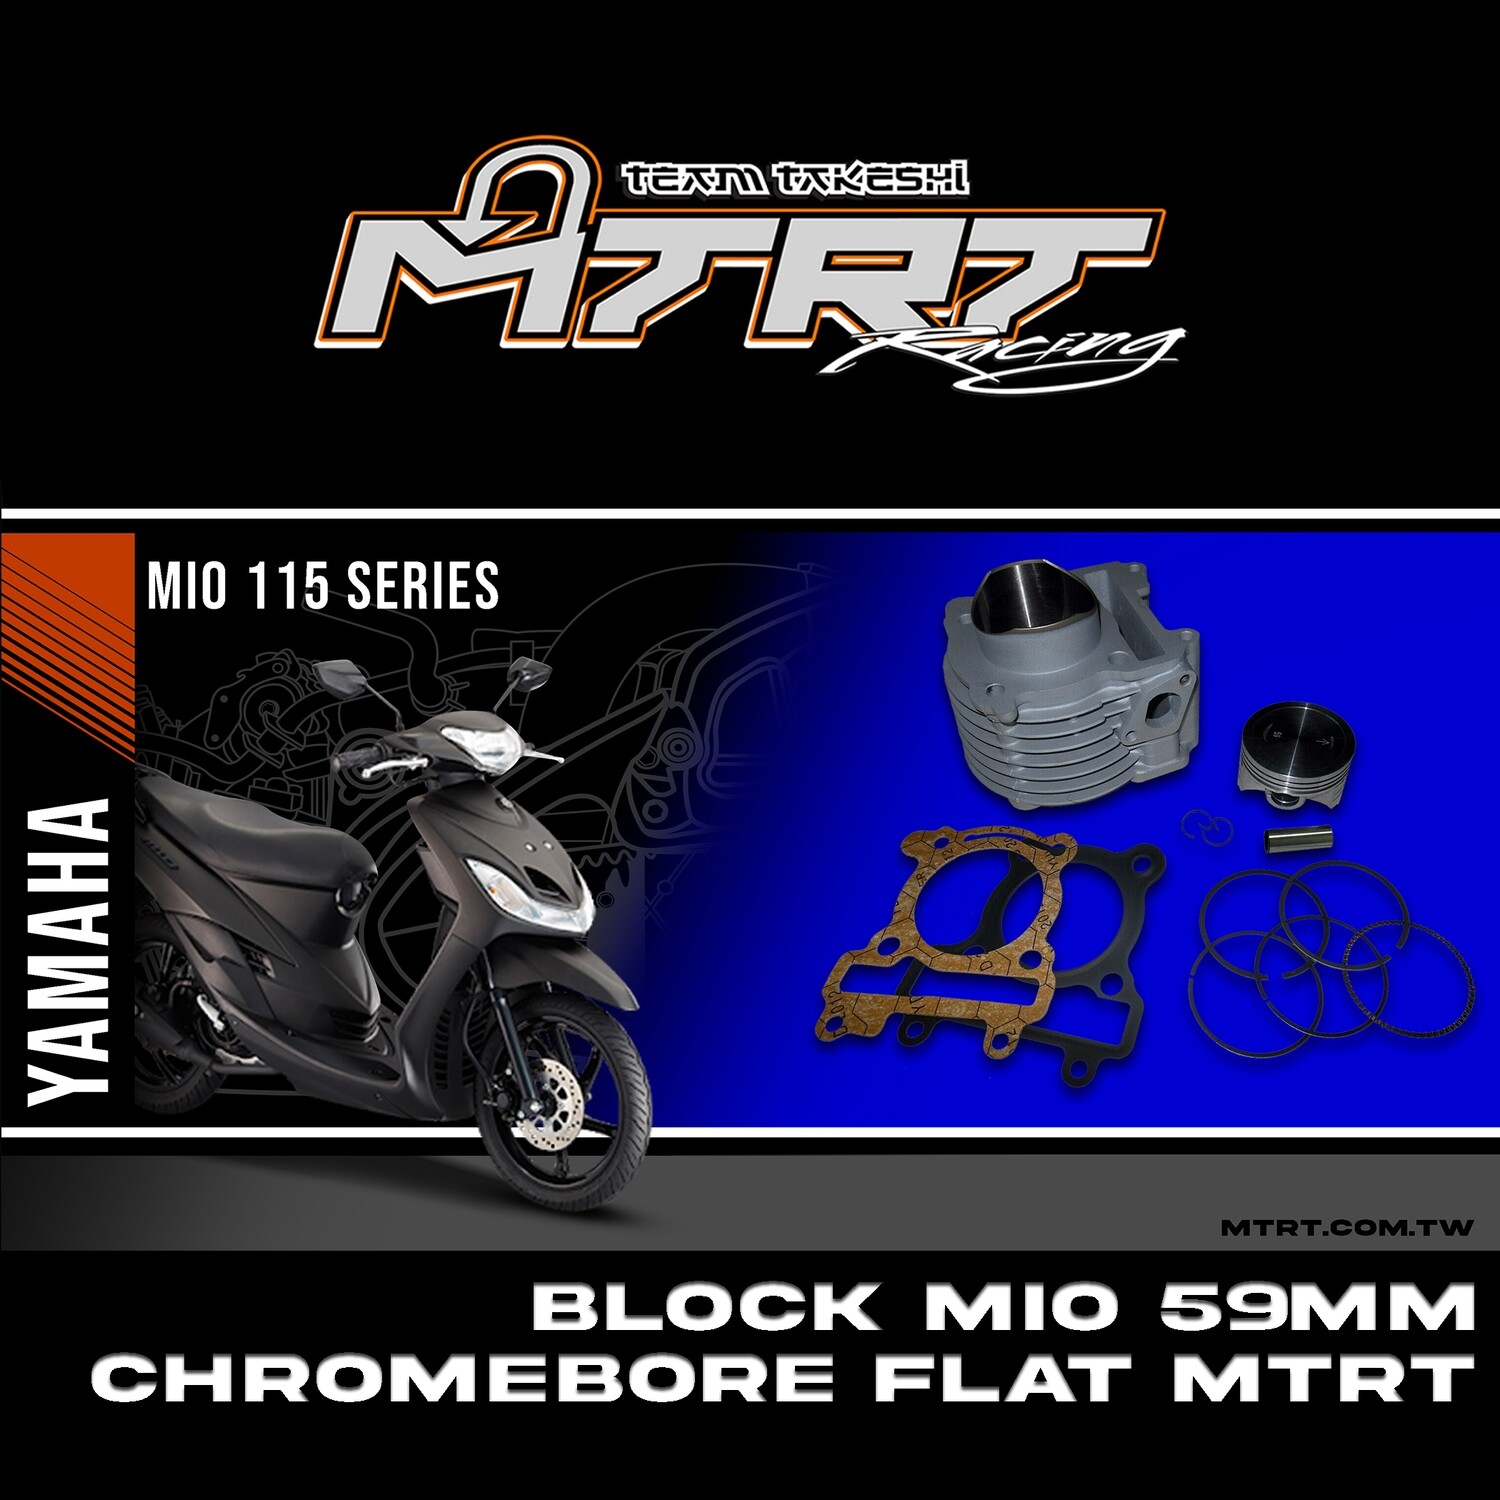 BLOCK MIO 59mm Chromebore cast piston FLAT MTRT